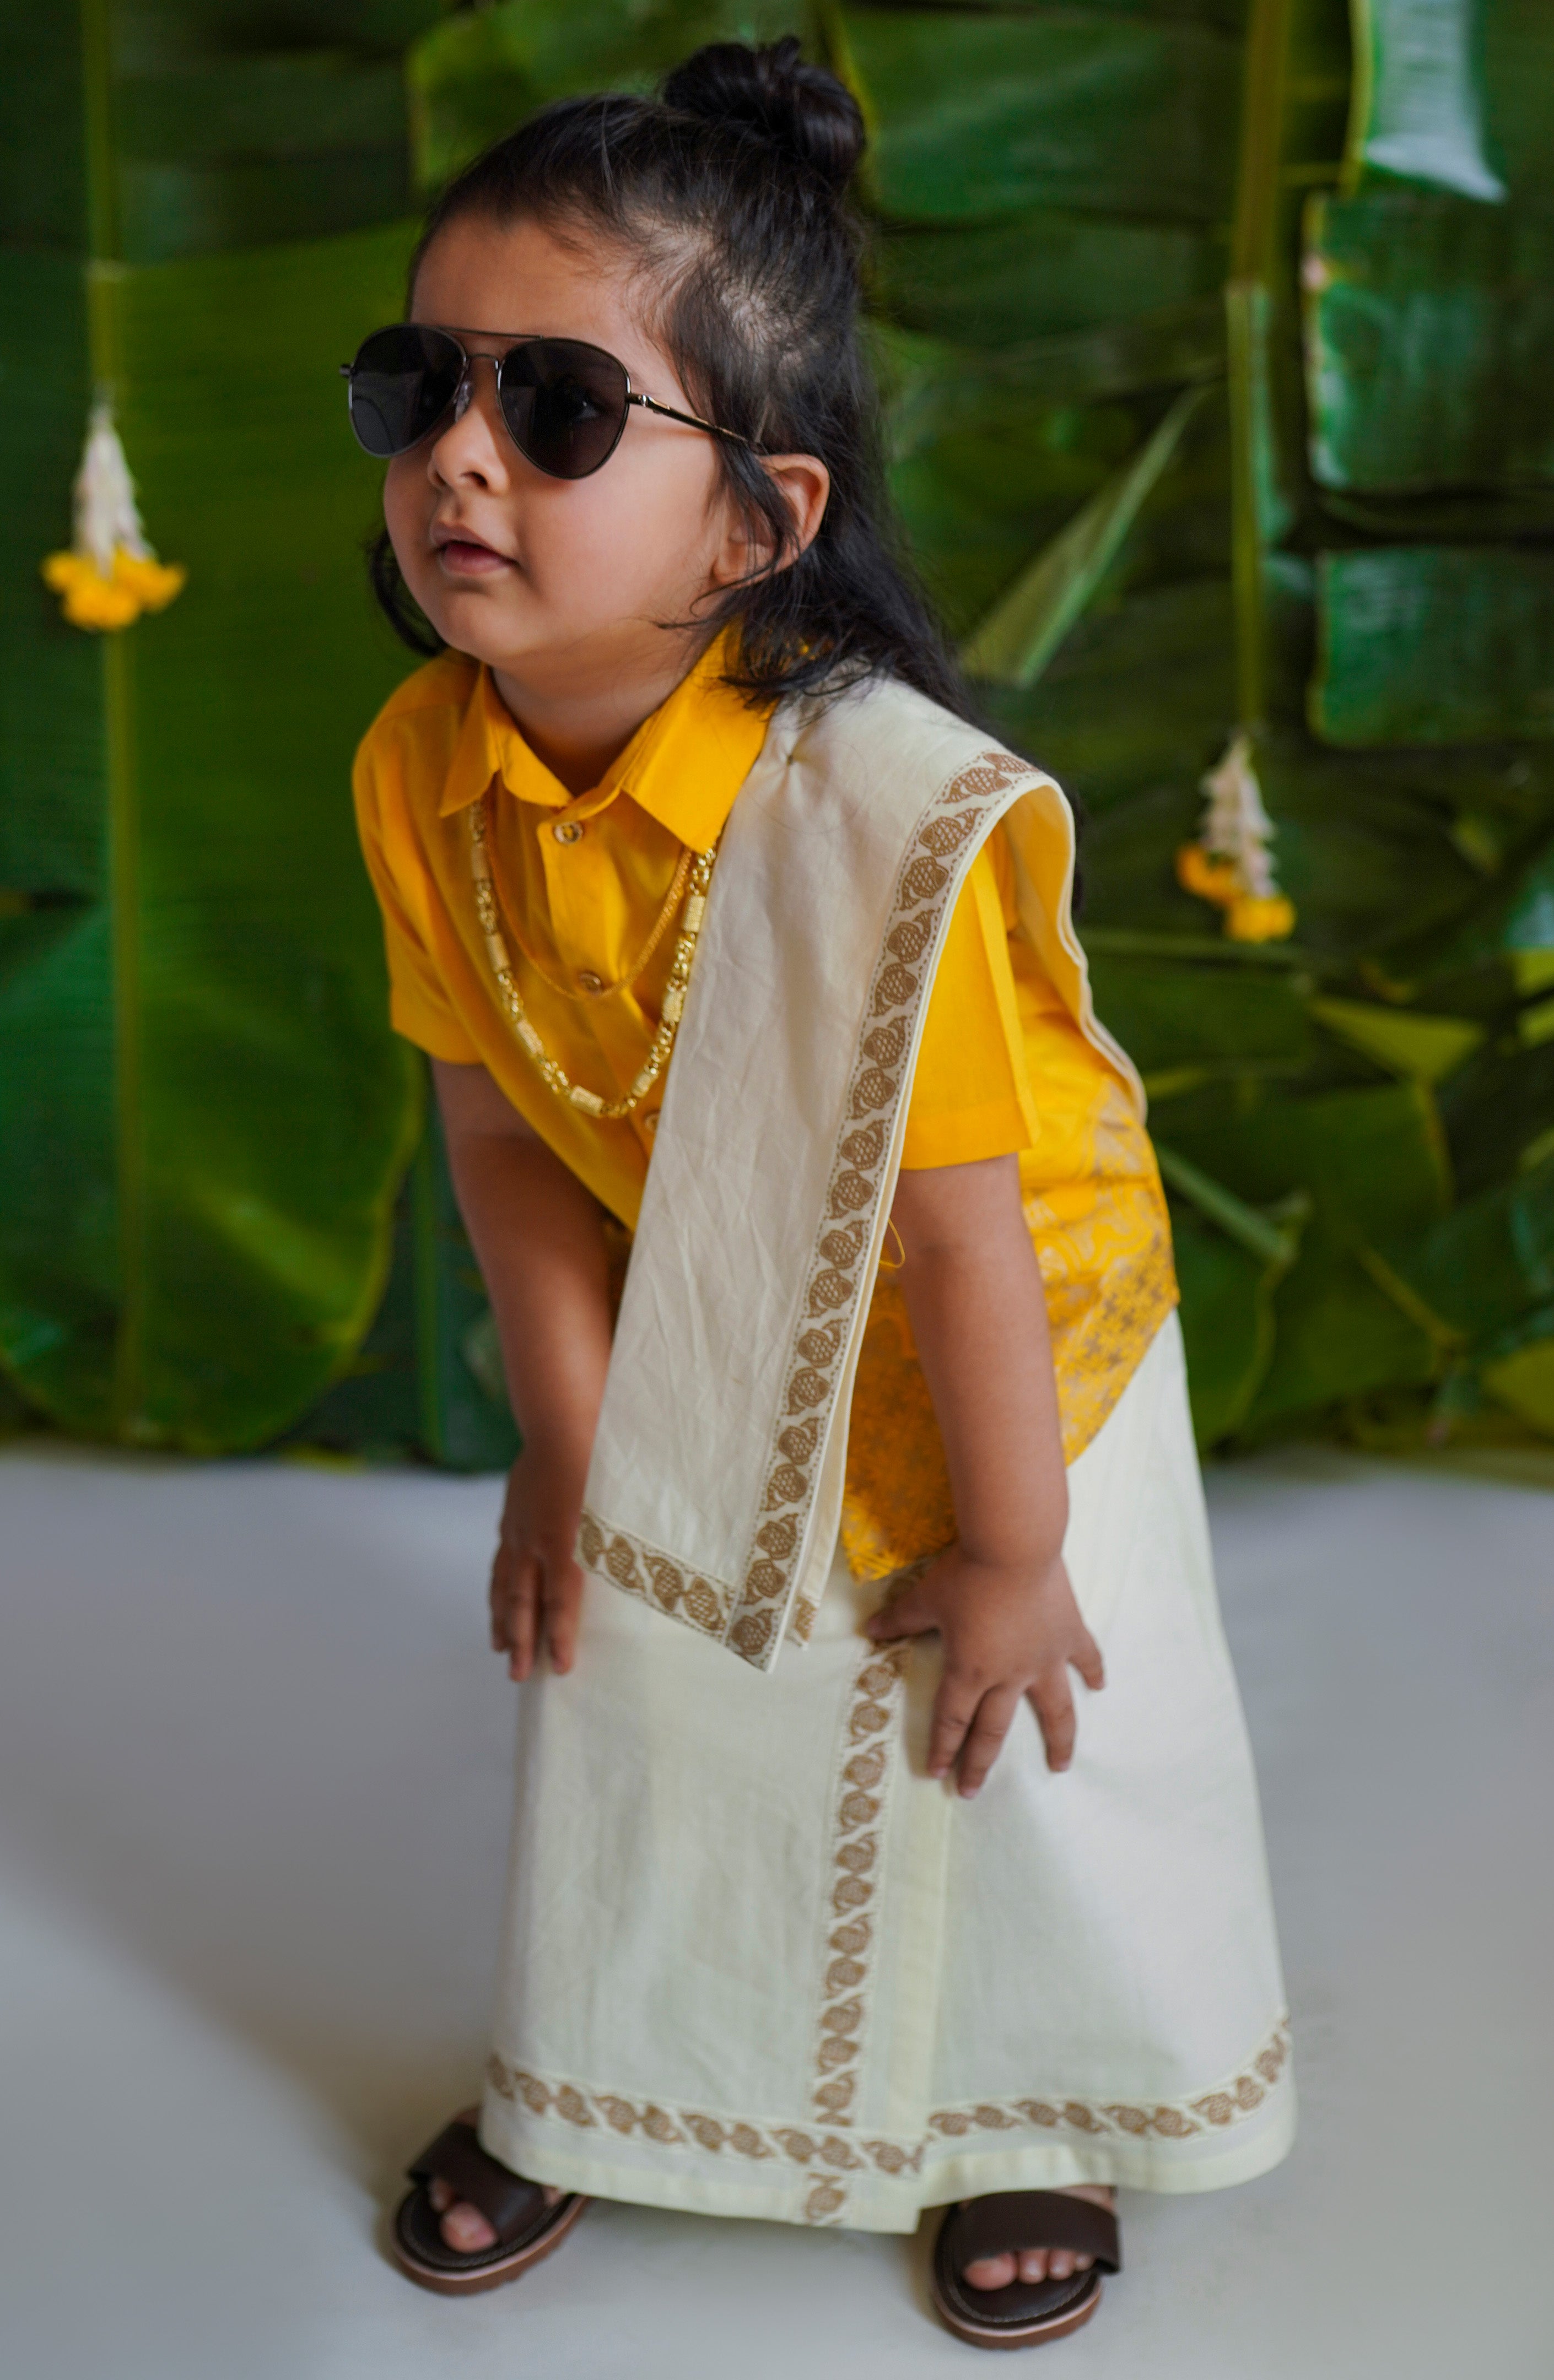 Buy AMIRTHA FASHION New south Indian traditional pattu pavadai pattu langa  voni Lehenga choli for girls dress (Gold) (6-12 Months) at Amazon.in